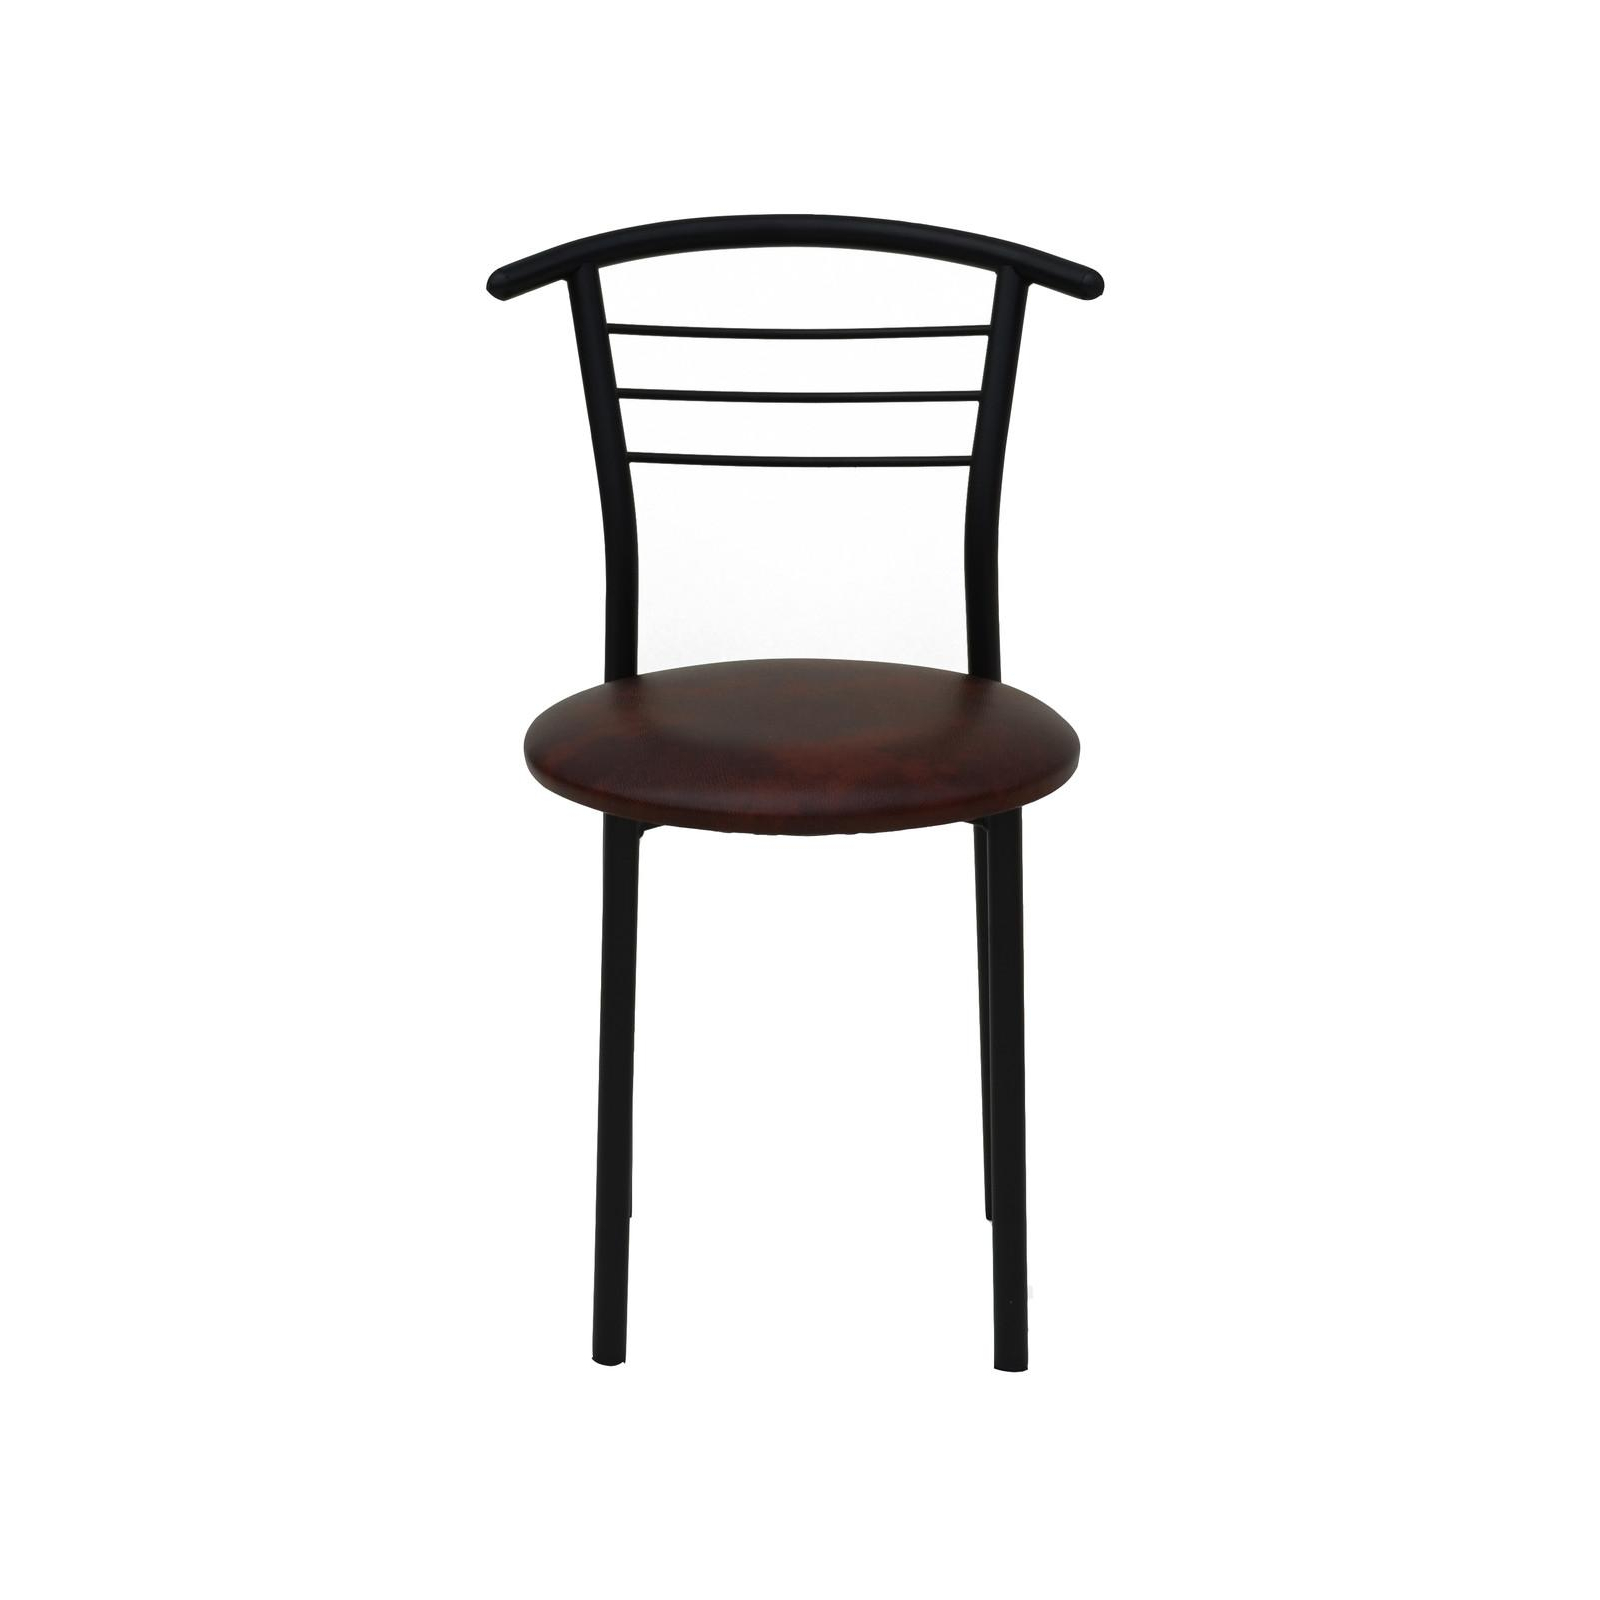 Кухонный стул Примтекс плюс 1011 black S-61 Коричневый (1011 black S-61)